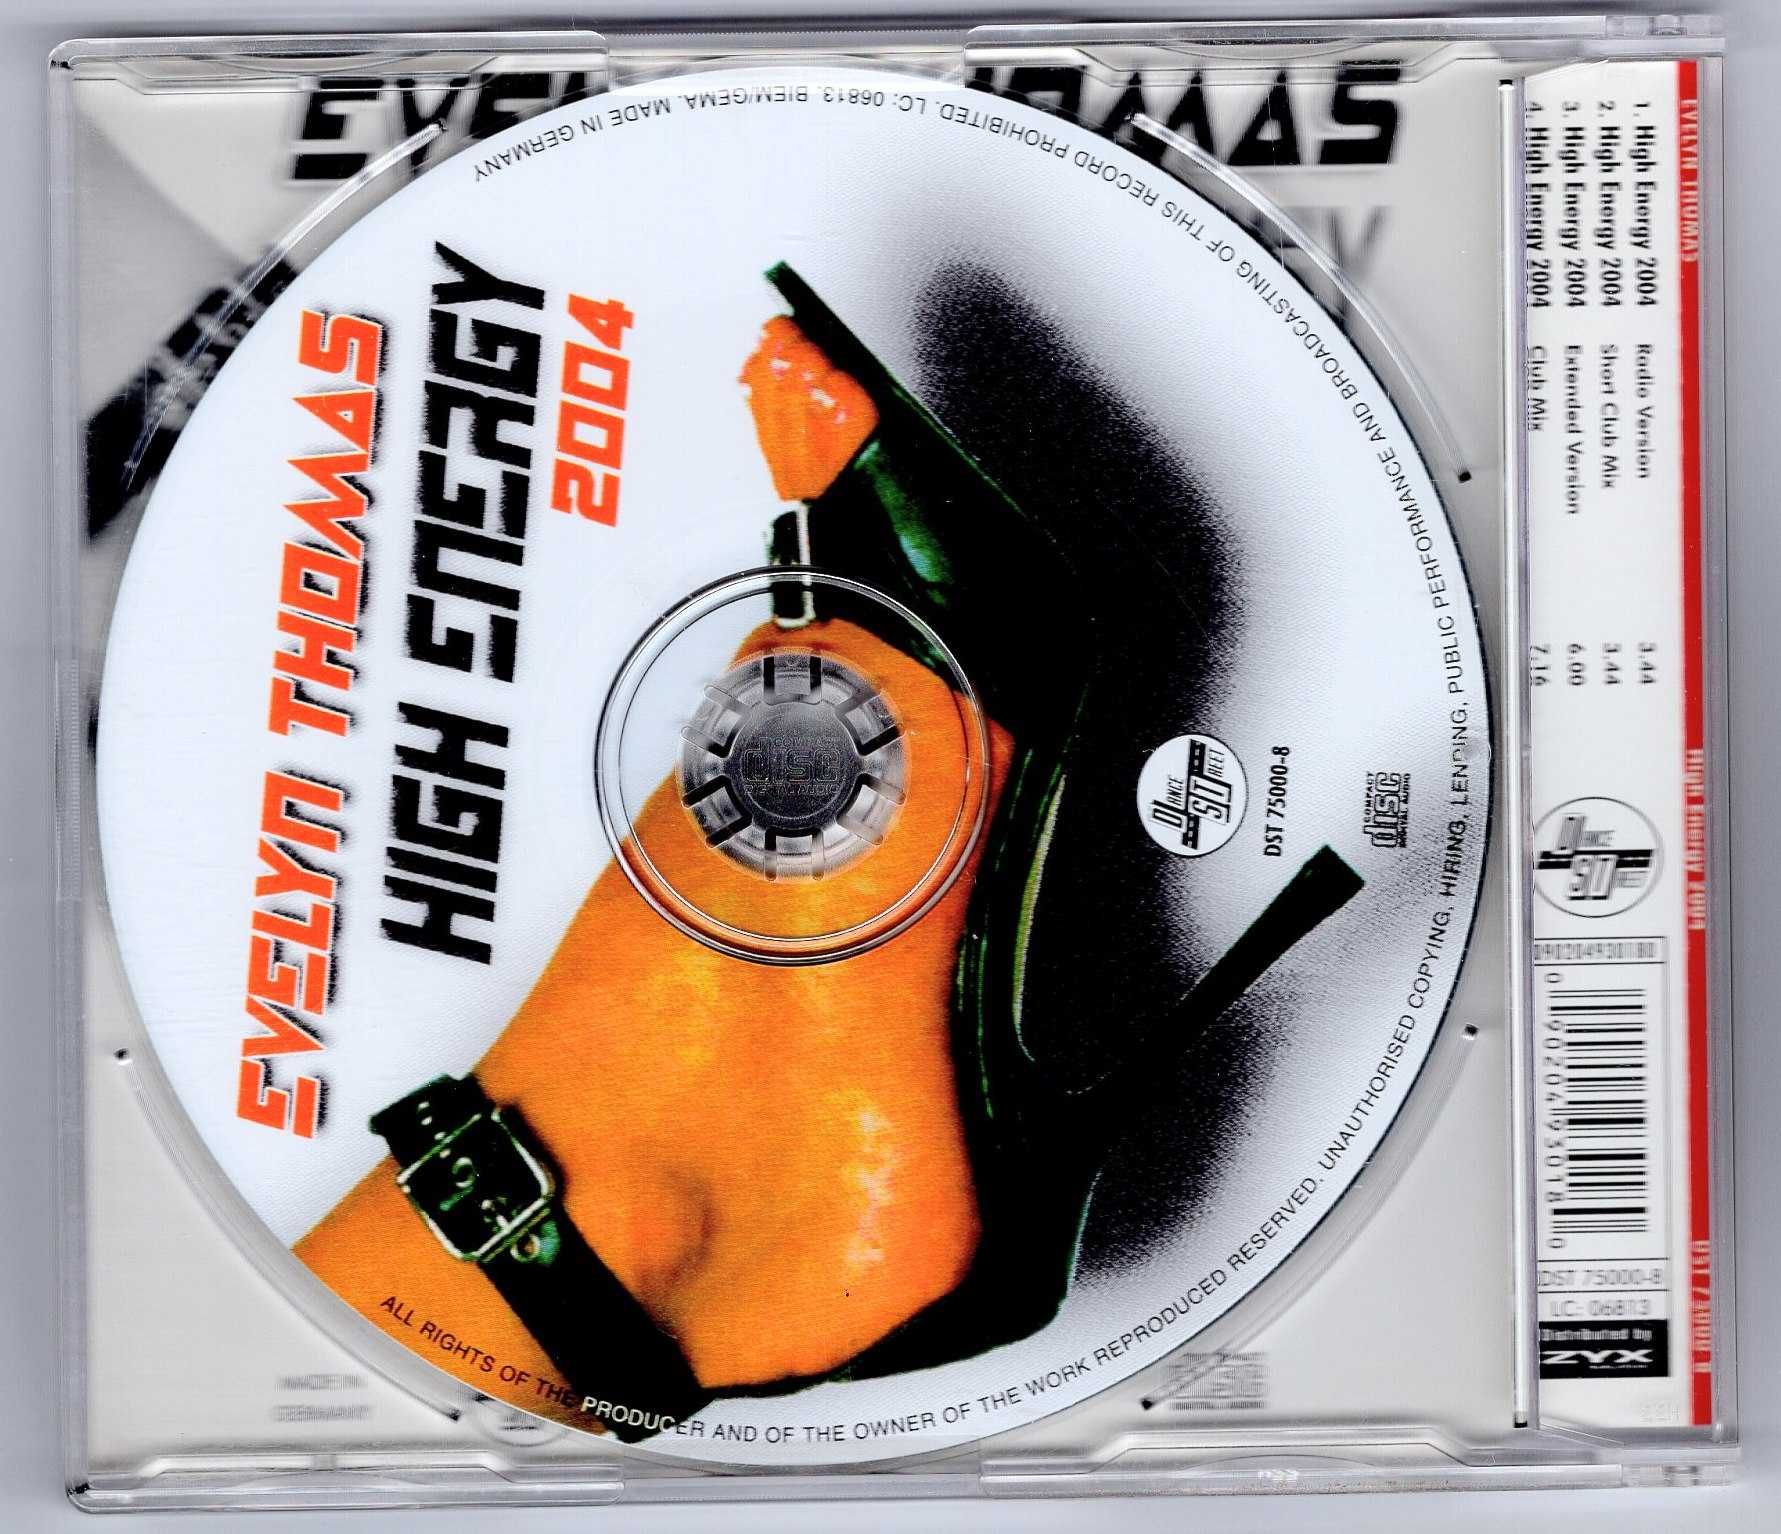 Evelyn Thomas - High Energy 2004 (CD, Maxi Singiel)